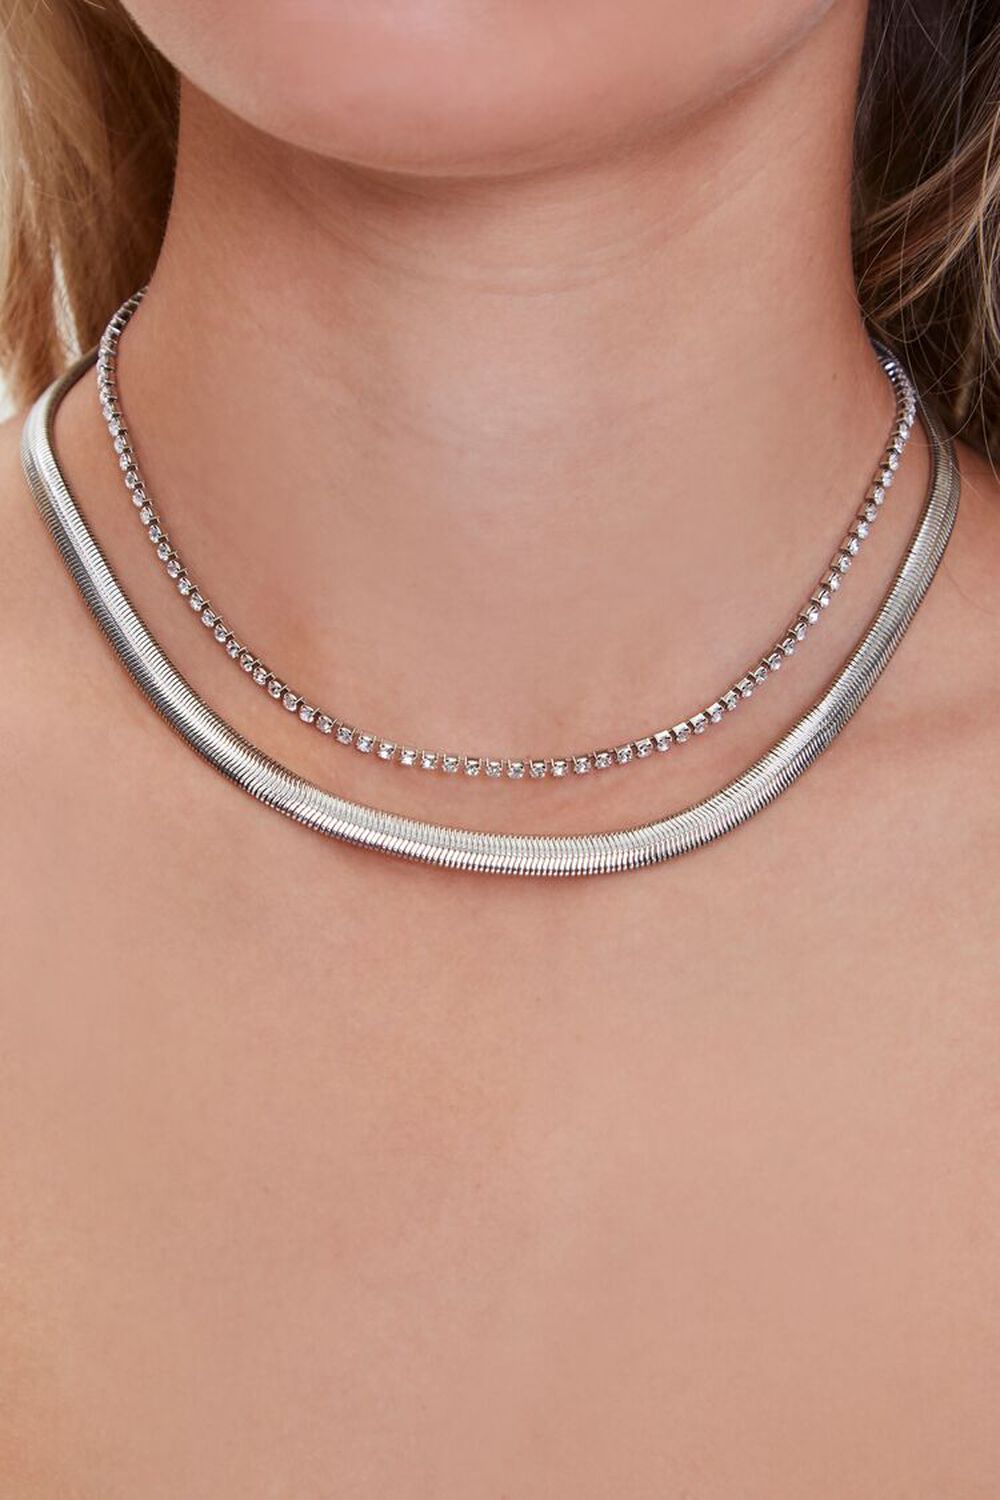 SILVER Rhinestone Serpentine Layered Necklace, image 1